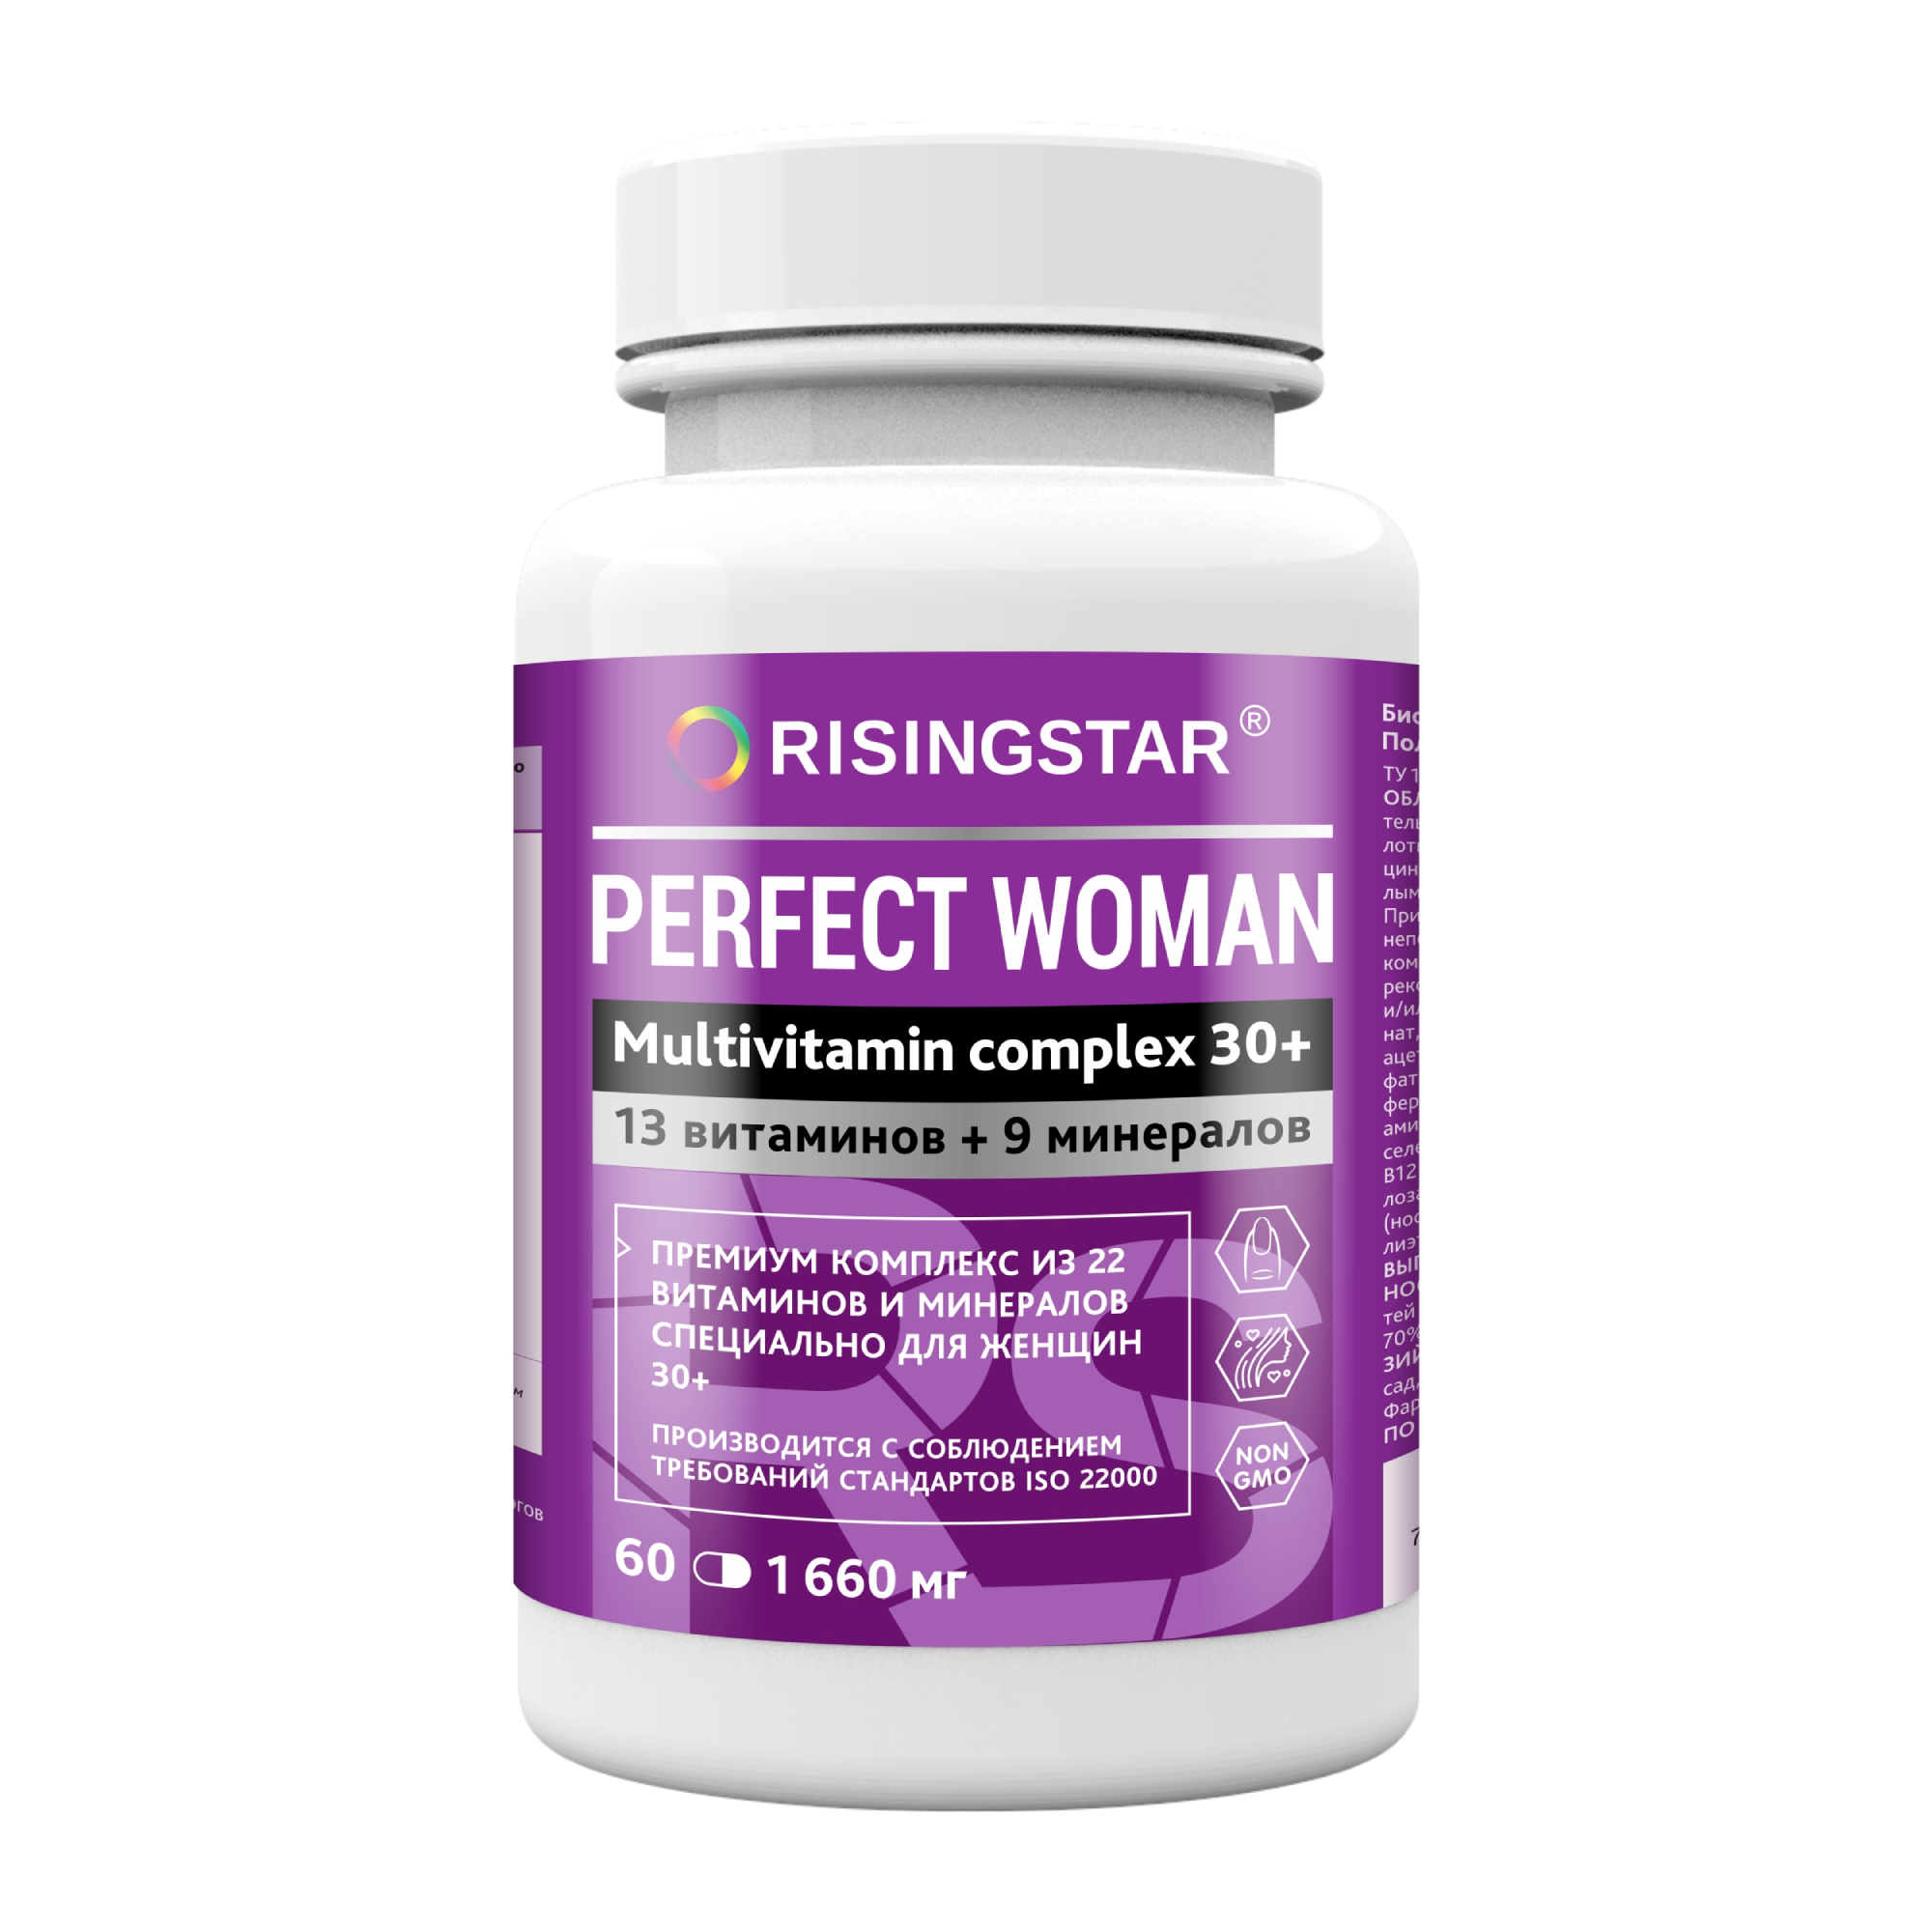 БАД Risingstar поливитаминный комплекс форте для женщин 60 таблеток, 60 г бад risingstar биотин фолиевая кислота с омега 3 для женщин 60 таблеток 100 г